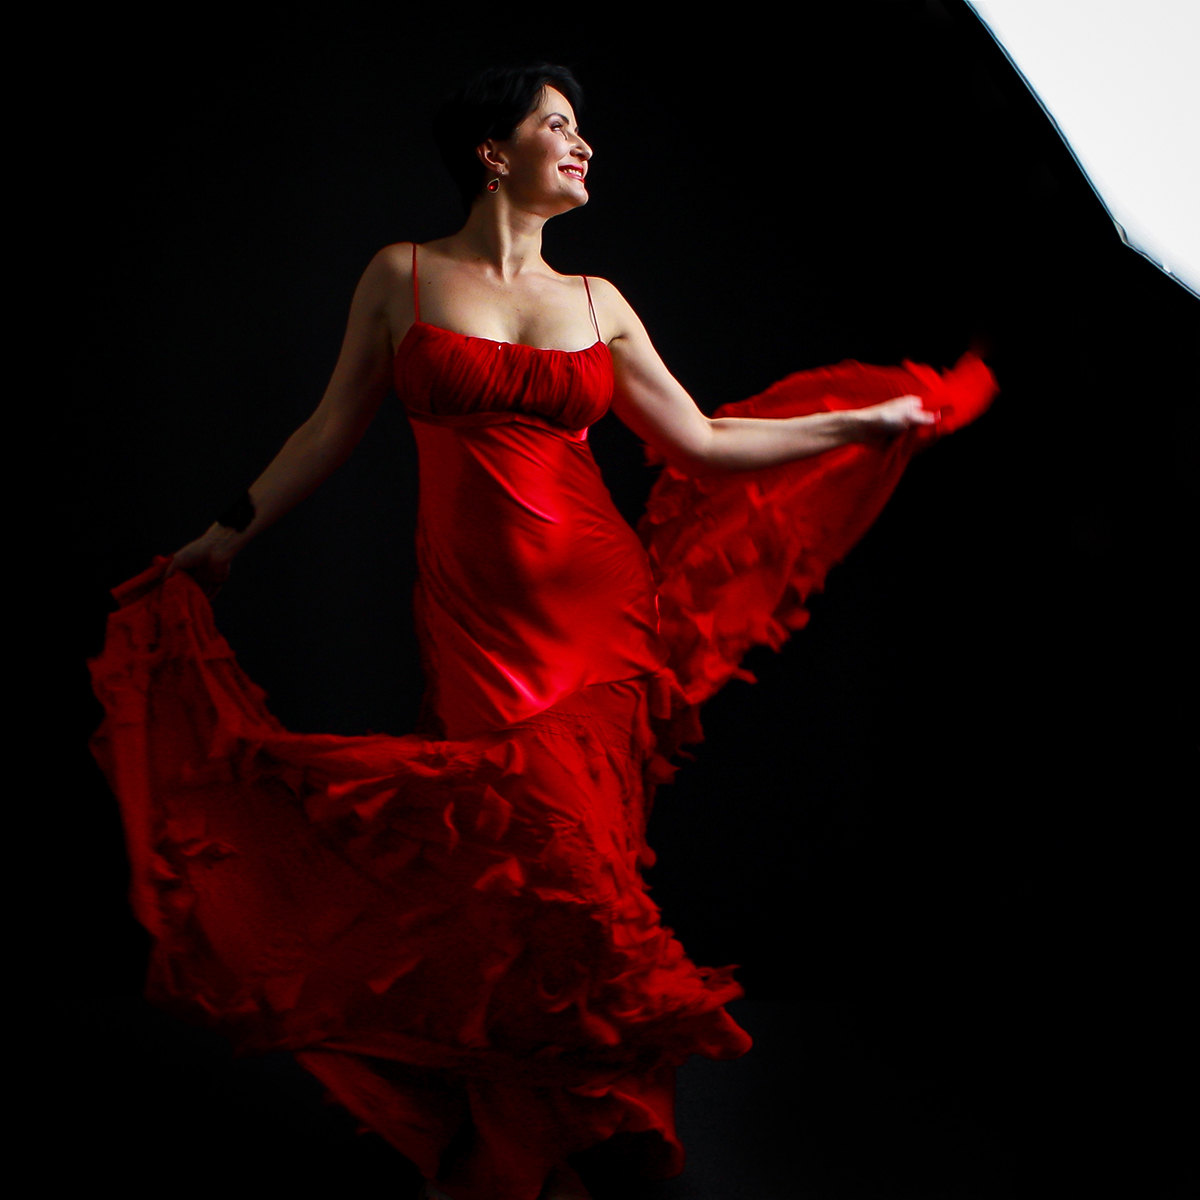 Sexy Red Dress Photoshoot - Julia Juliati - I'm Taking You With Me